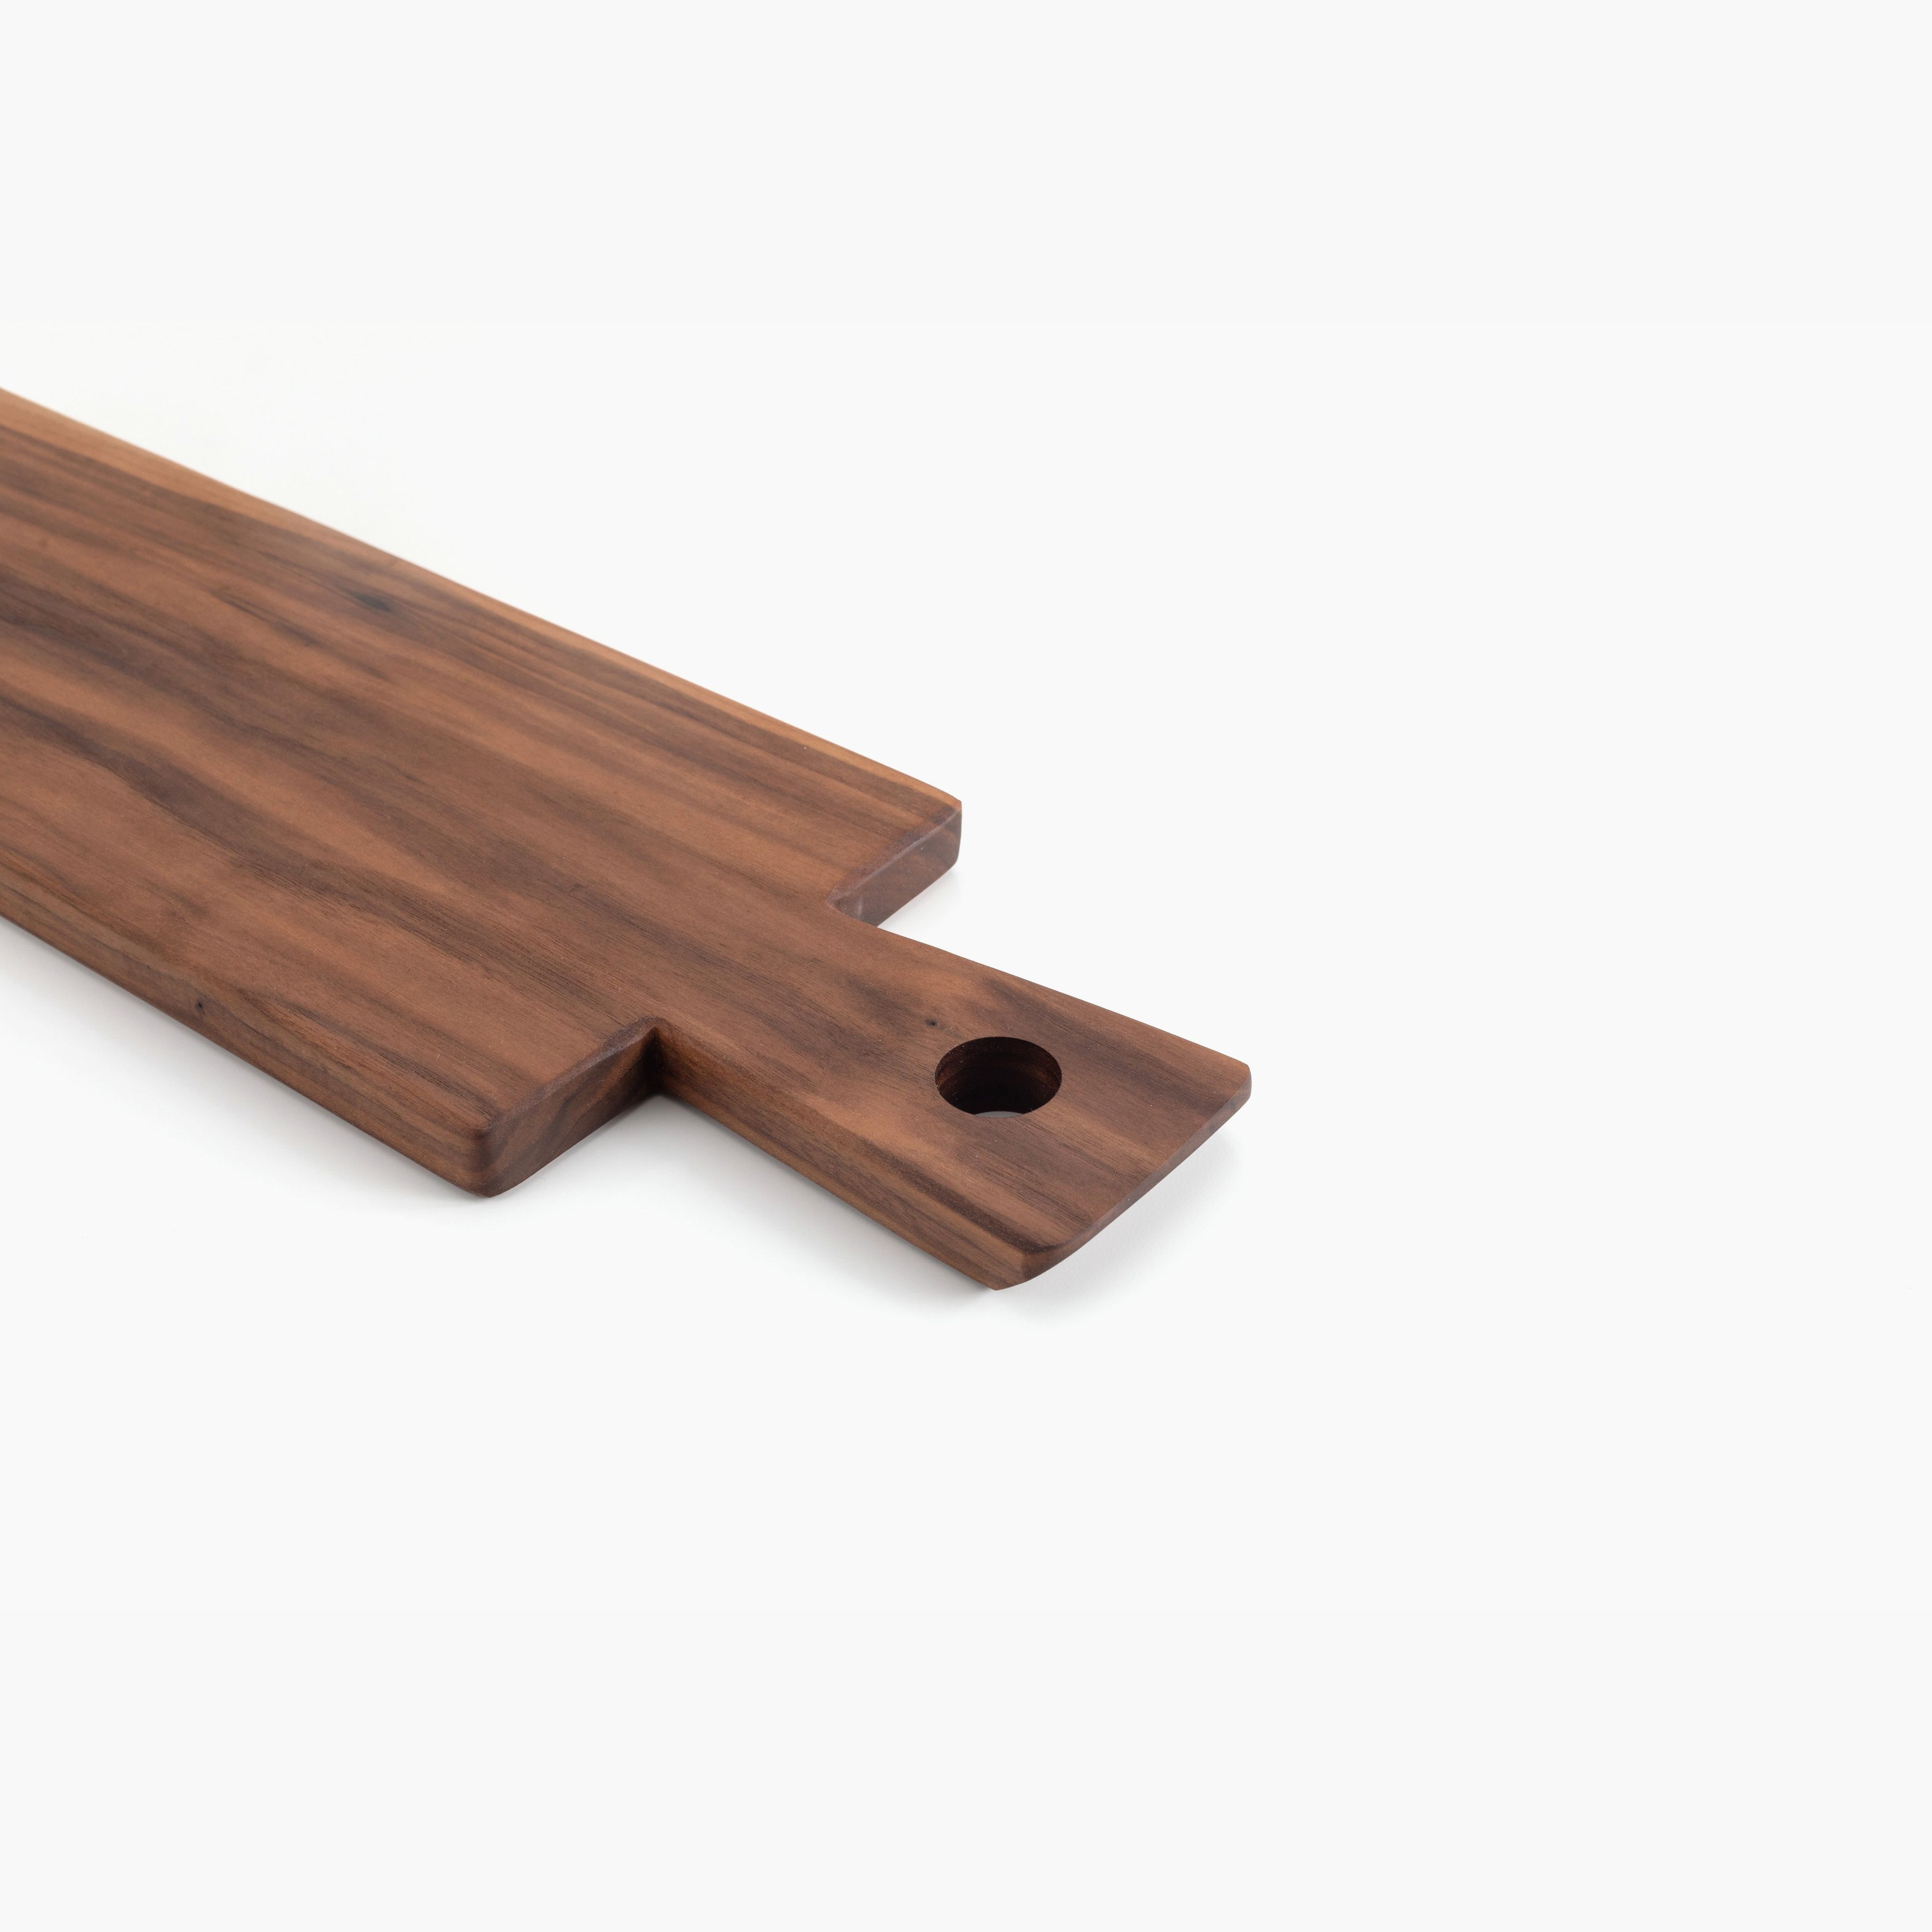 20" Wood Paddle Board - Walnut